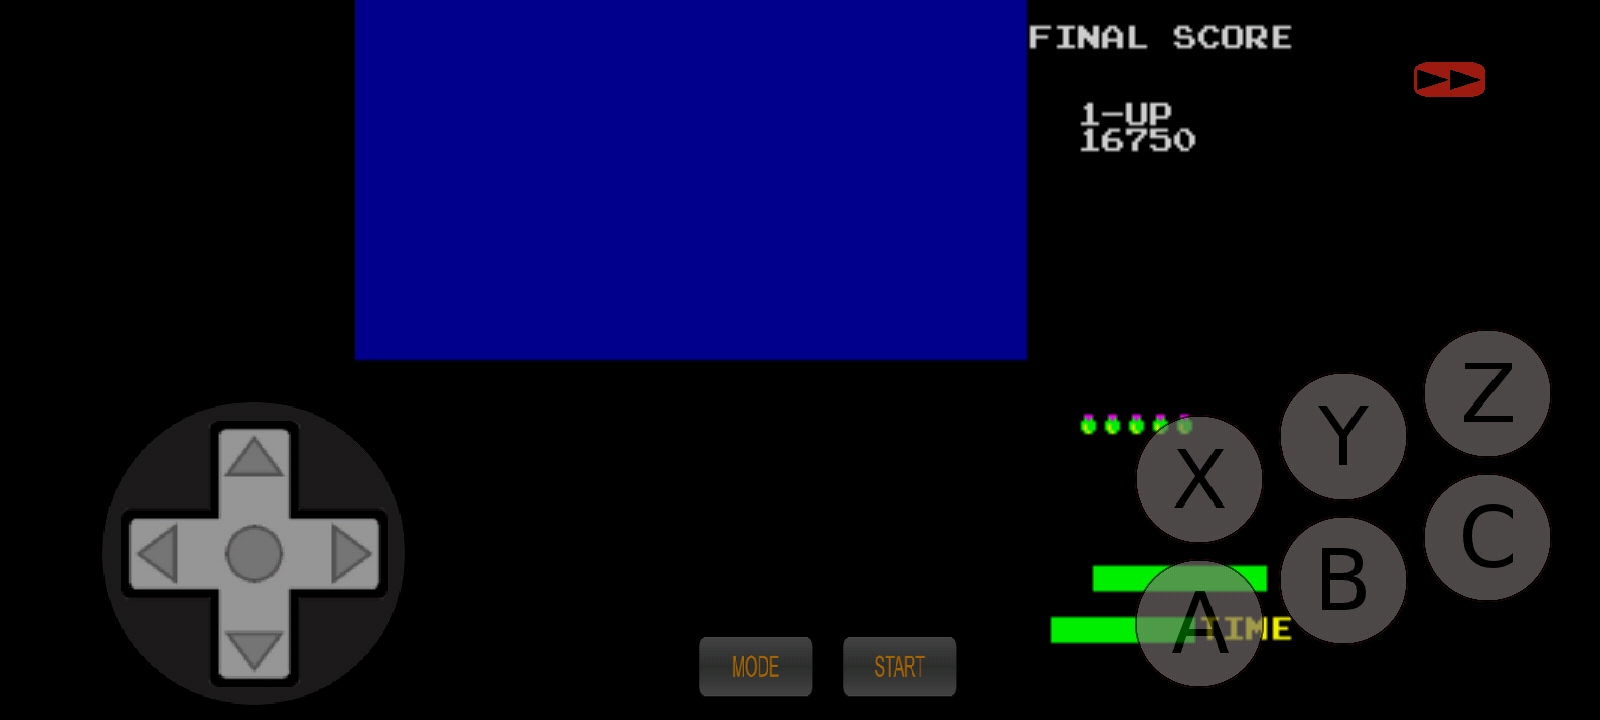 Hauntedprogram: Frogger (Sega Genesis / MegaDrive Emulated) 16,750 points on 2022-07-16 22:58:49